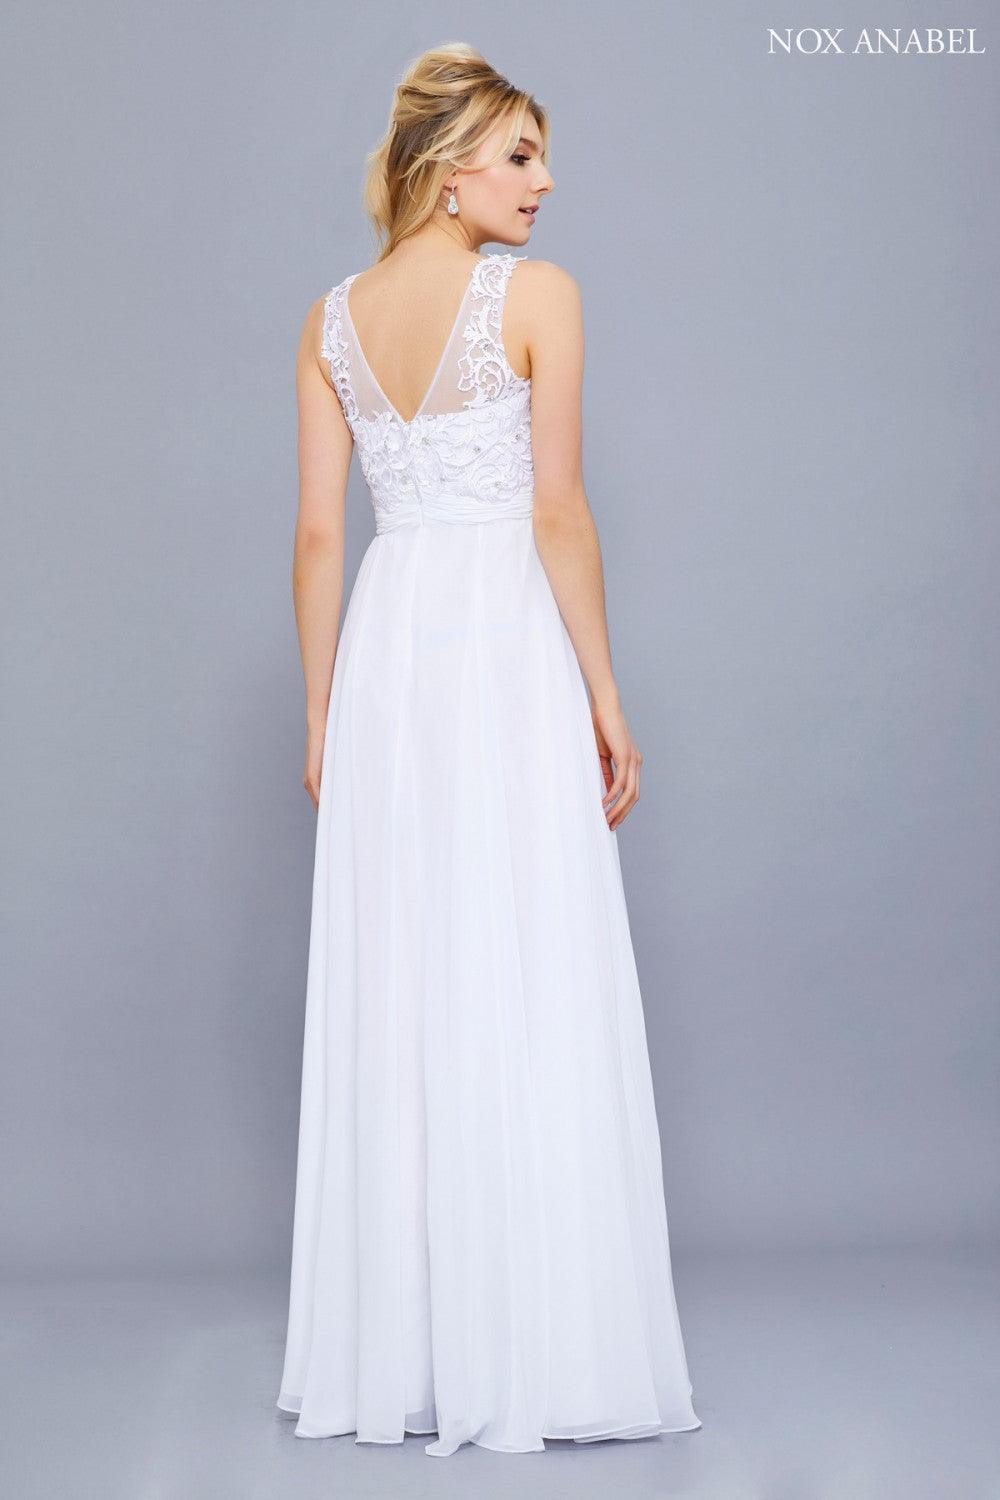 Long Sleeveless Formal Wedding Dress - The Dress Outlet Nox Anabel